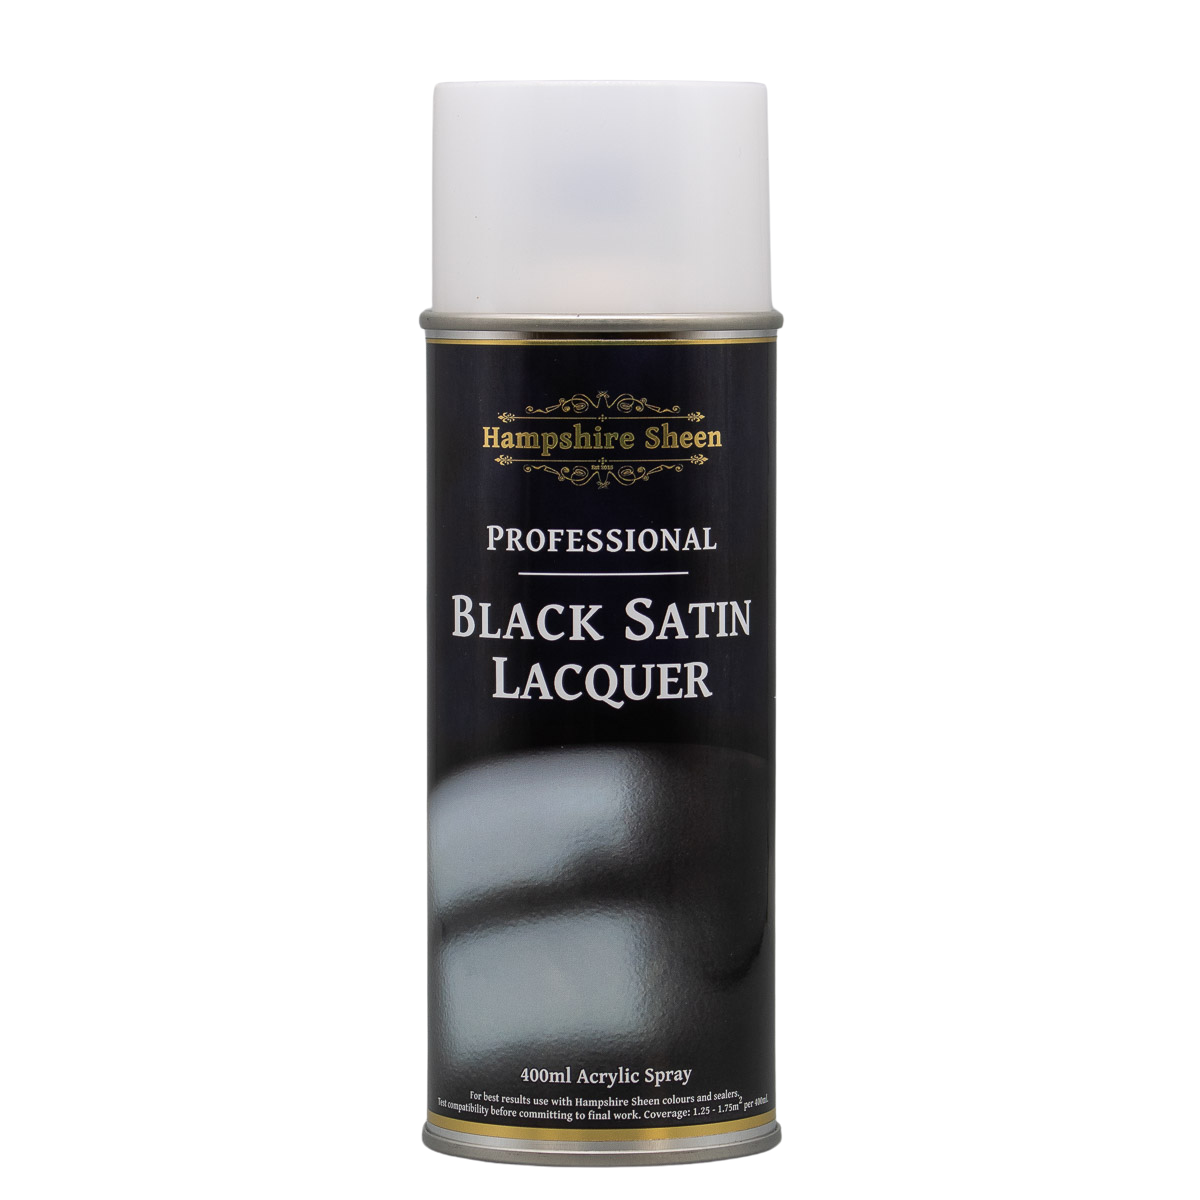 Pro Black Satin Lacquer Spray - Hampshire Sheen